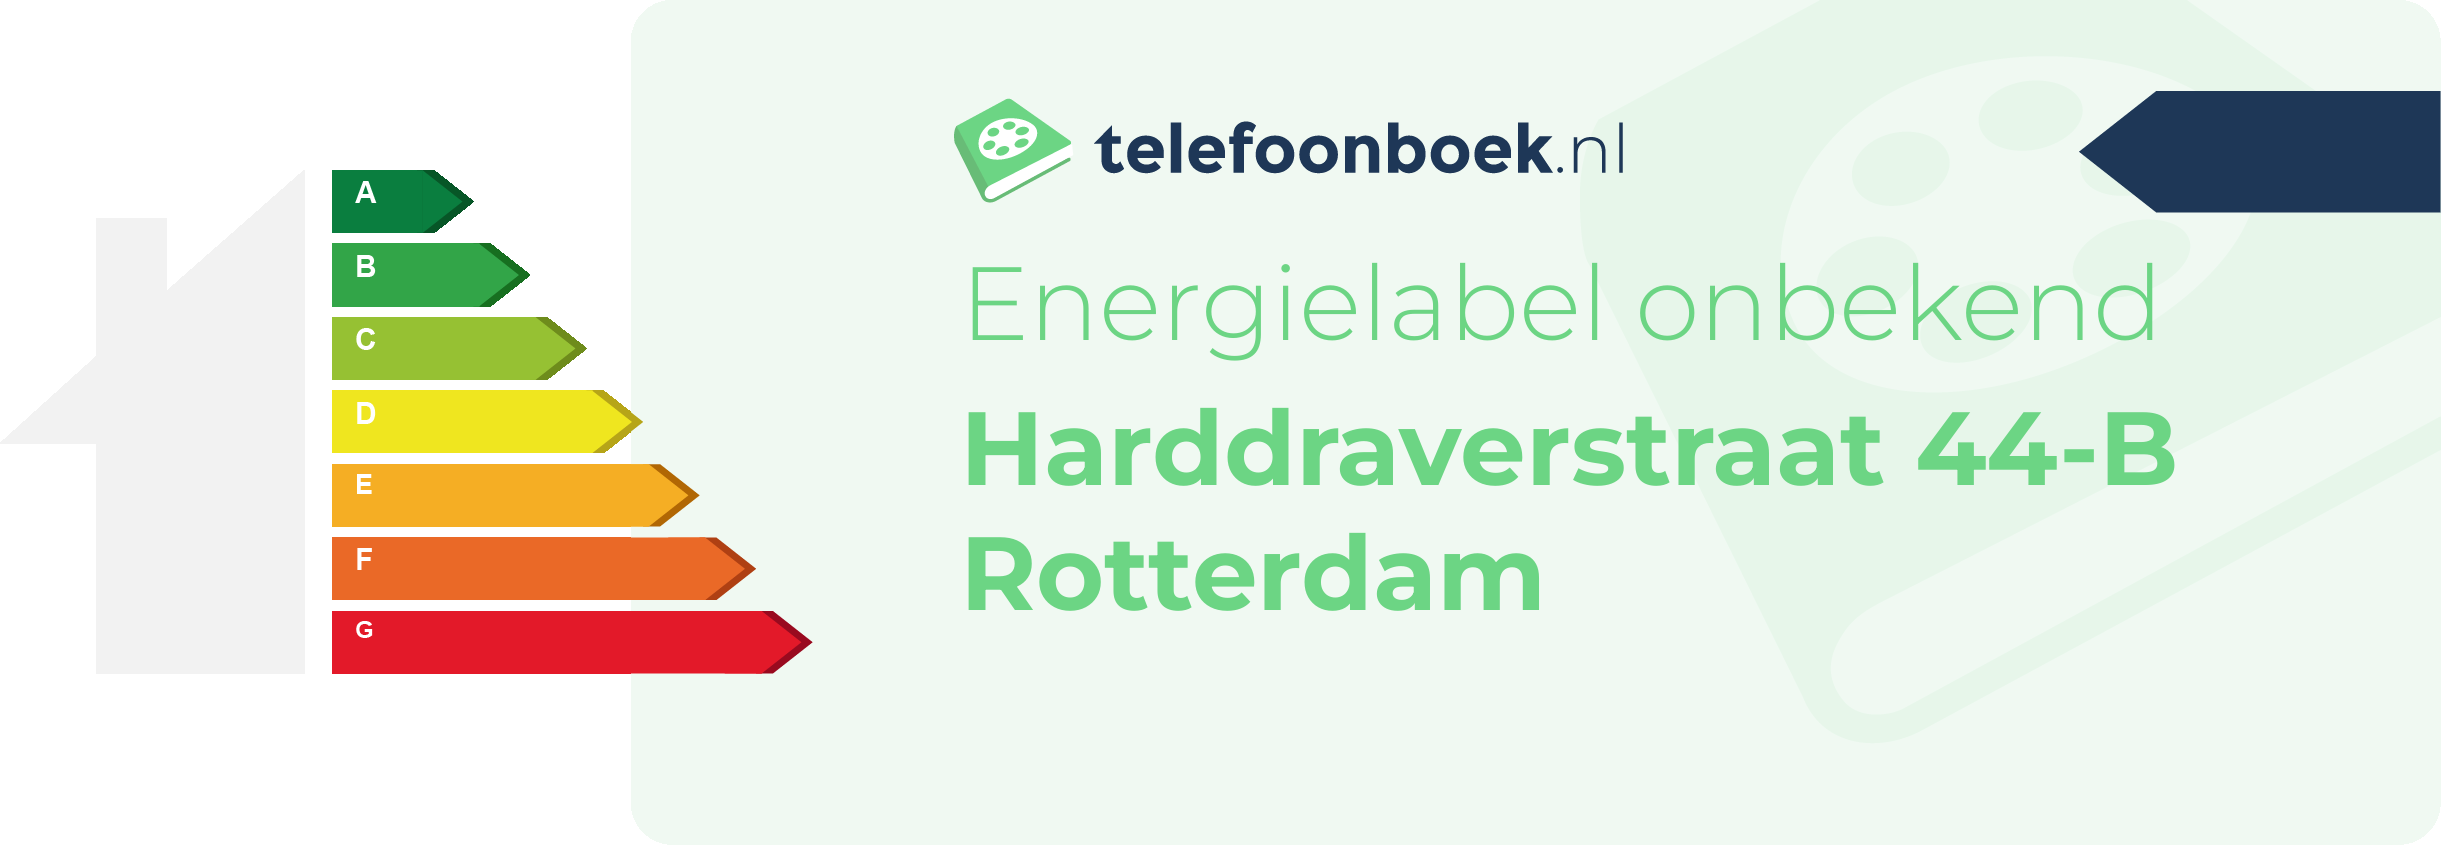 Energielabel Harddraverstraat 44-B Rotterdam